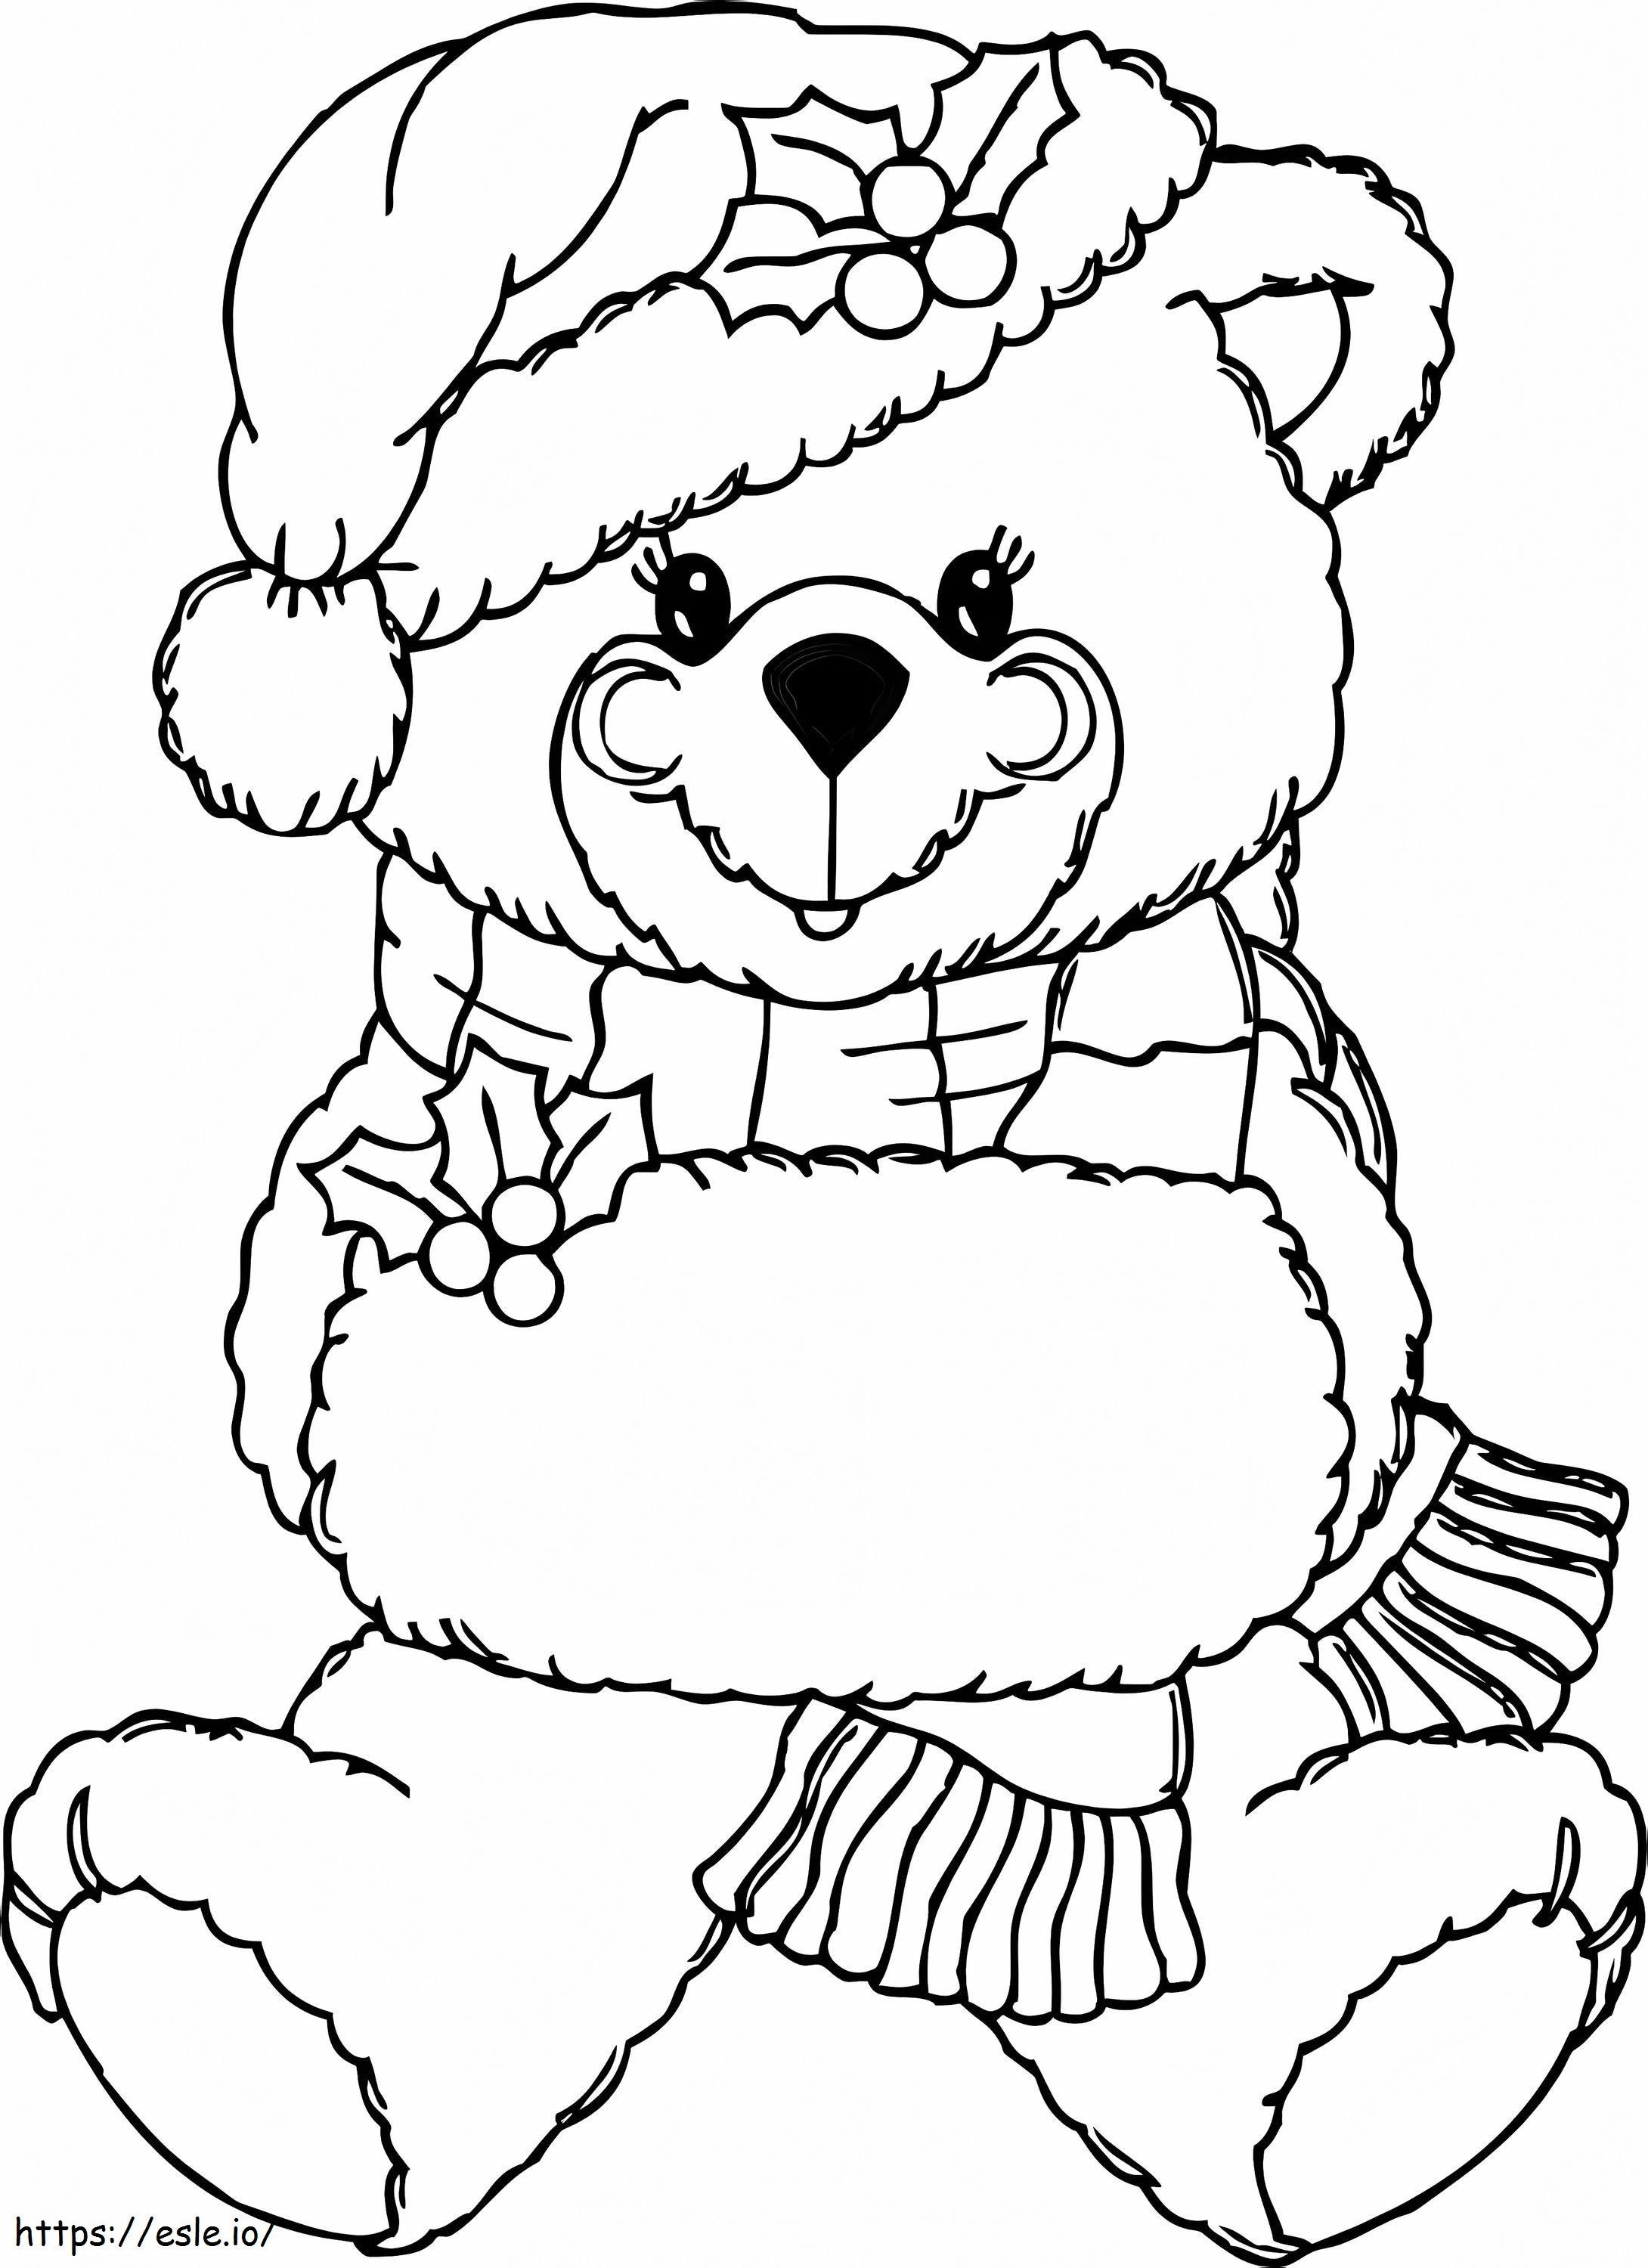 Printable Teddy Bear coloring page